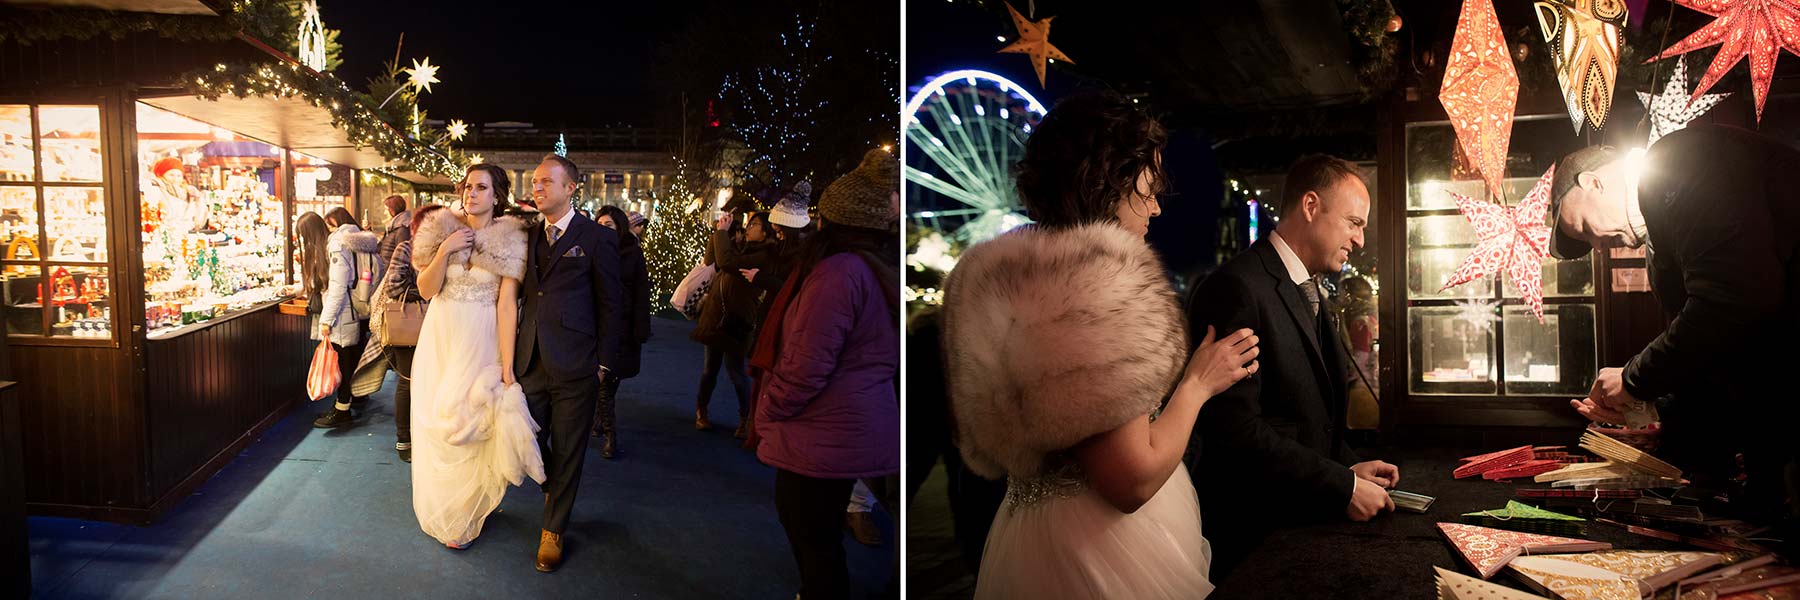 Edinburgh Christmas elopement wedding photography